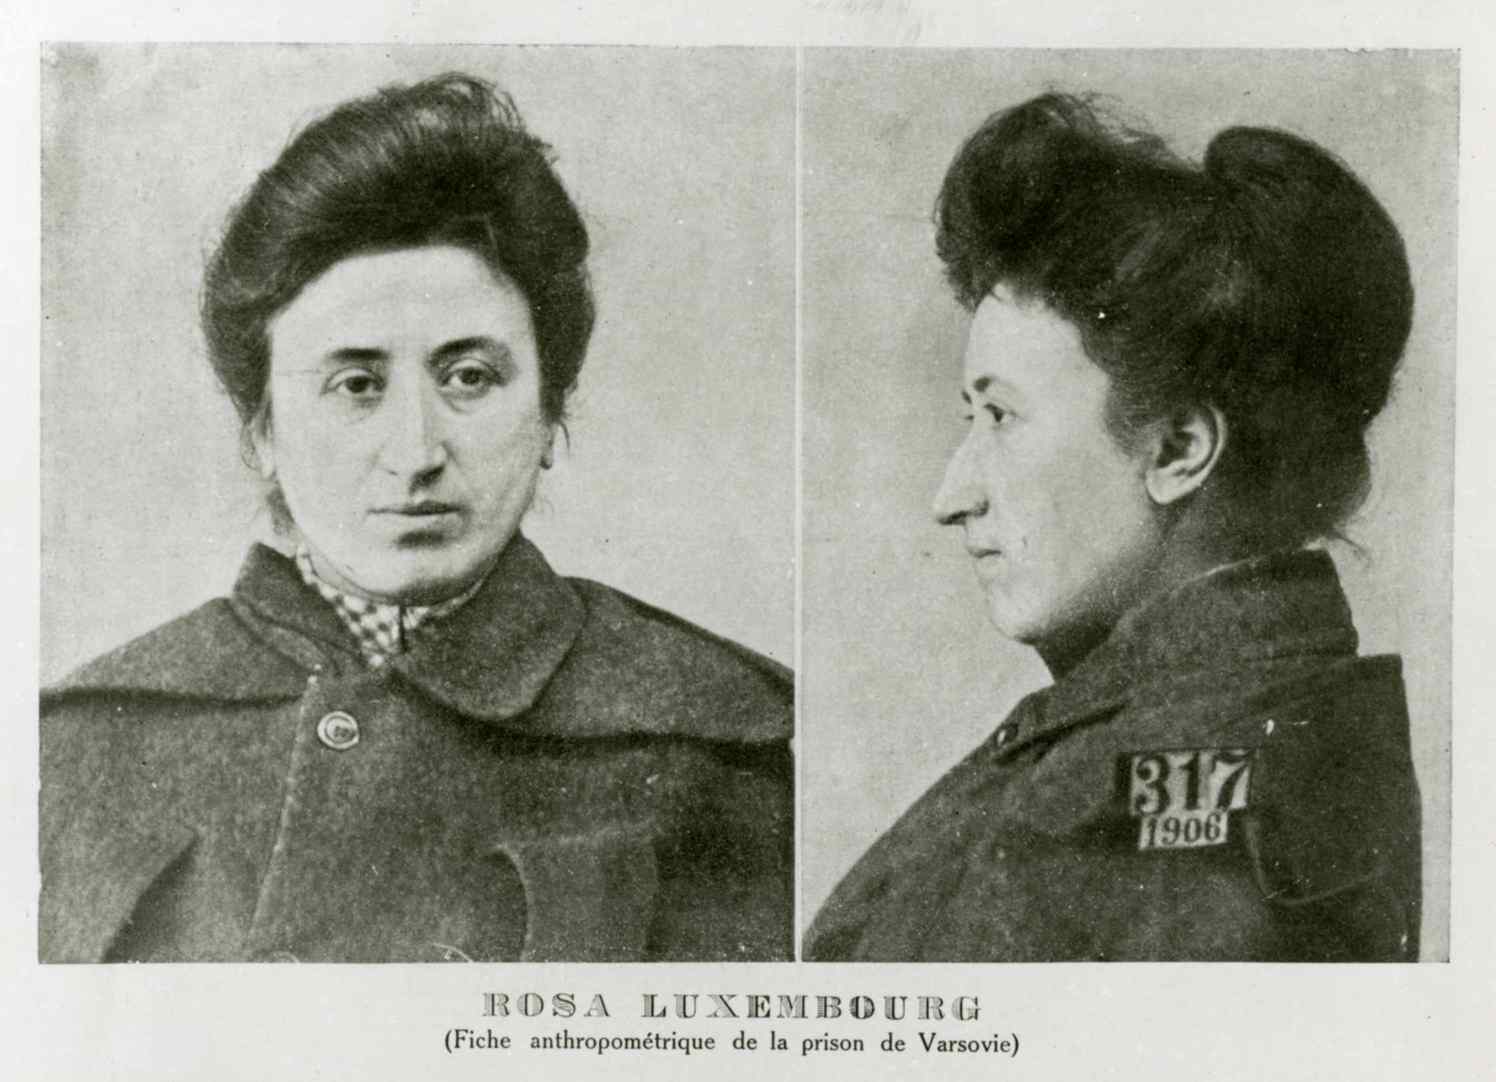 https://rosaluxemburgblog.files.wordpress.com/2015/09/1906-rosa-luxemburg-in-warsaw-prison-iisg-high-res.jpg